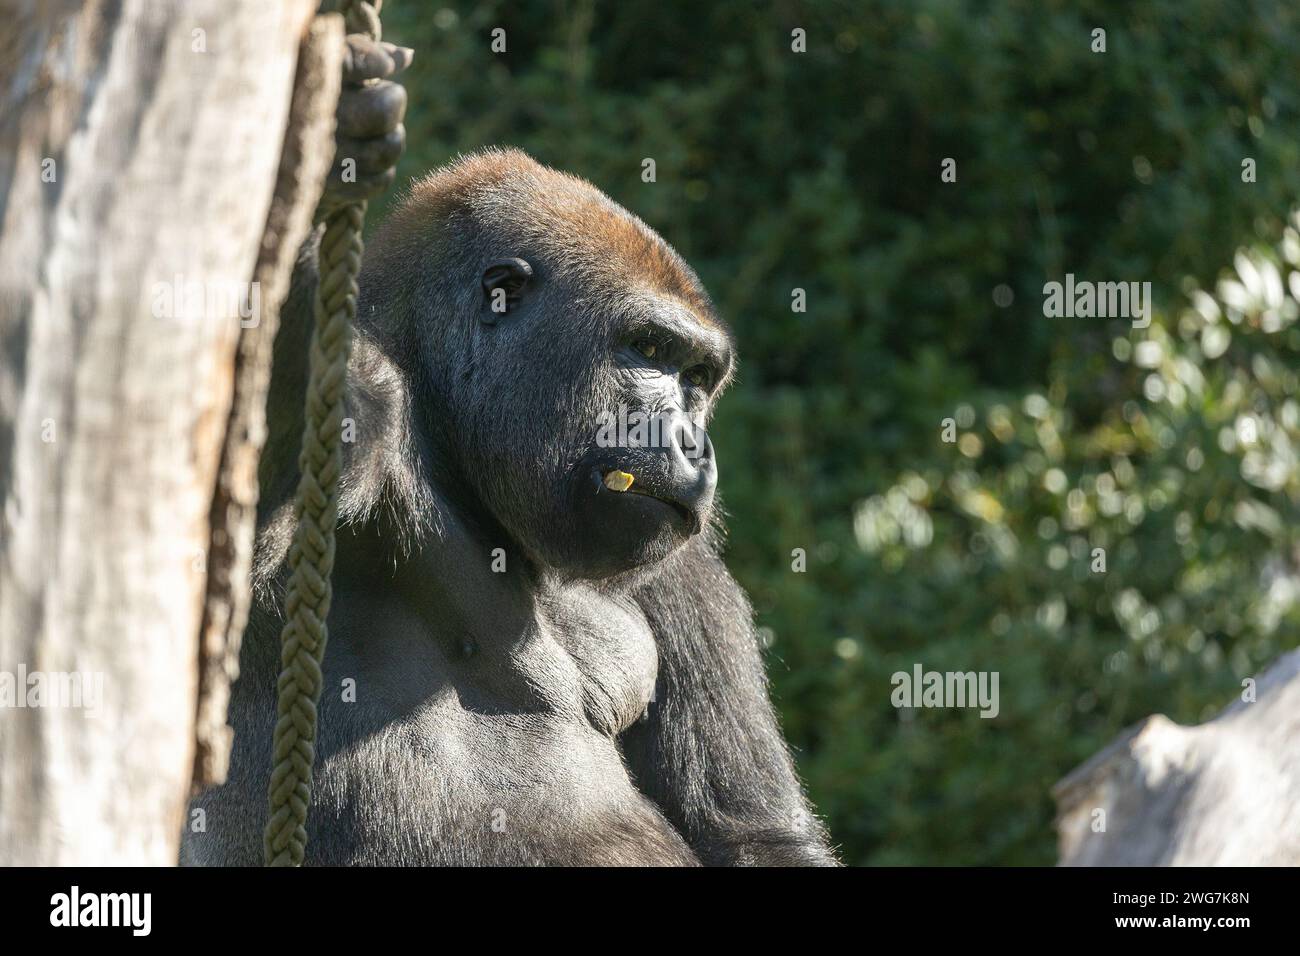 Majestic Western Lowland Gorilla, Gorilla gorilla gorilla, roaming the lush jungles of Central Africa, portraying strength and familial bonds. Stock Photo